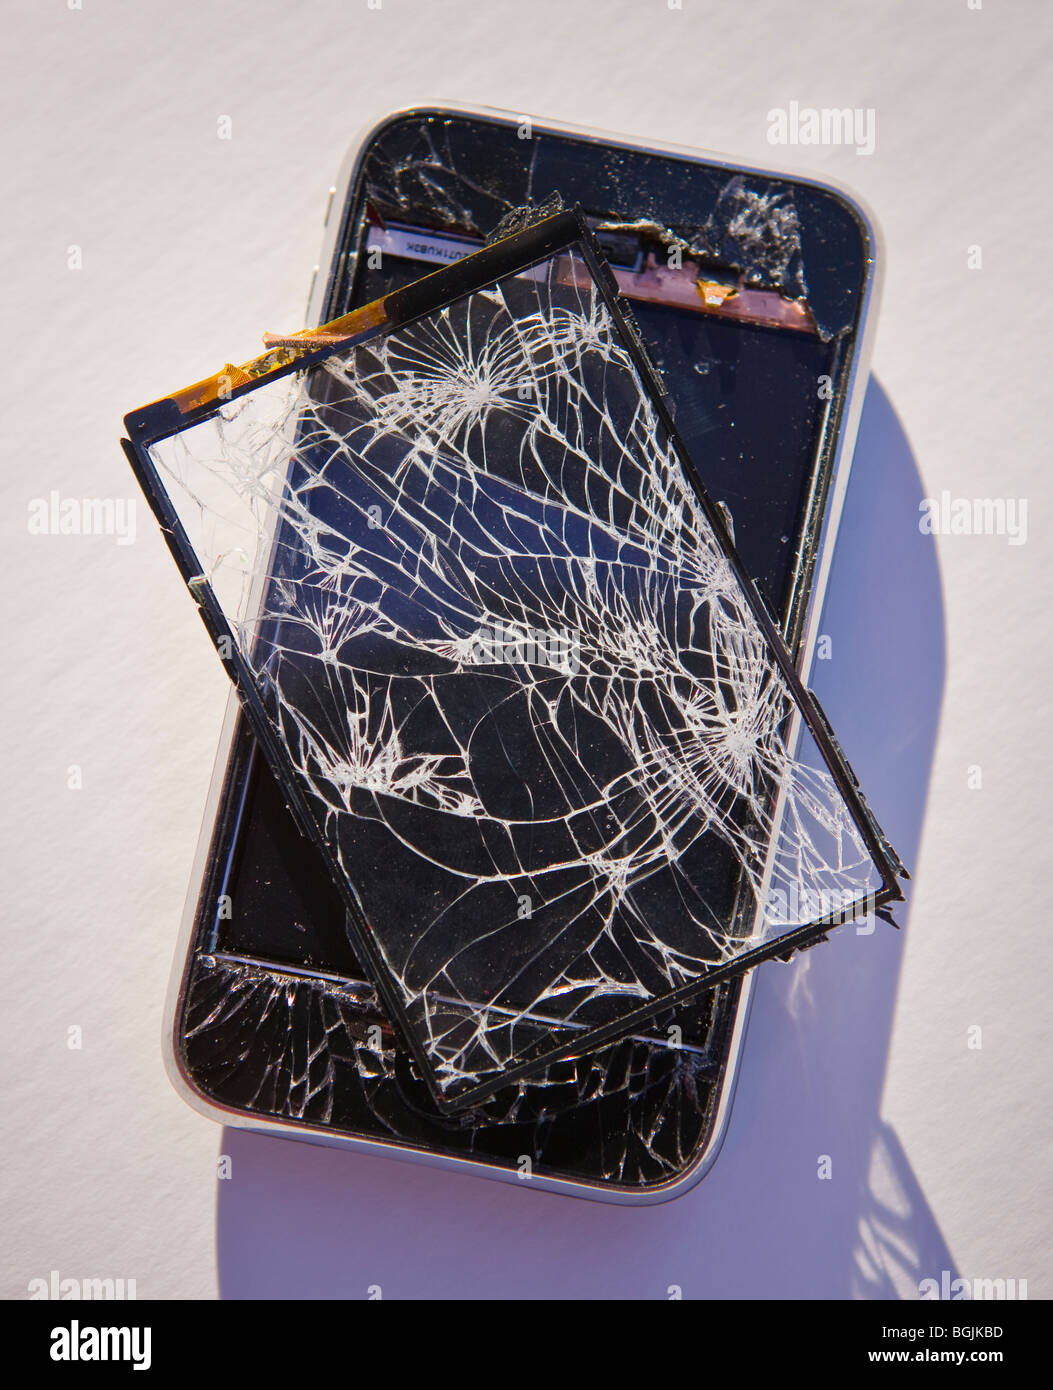 ARLINGTON, VIRGINIA, USA - Damaged Apple iPhone 3G smart phone, with shattered screen. Stock Photo